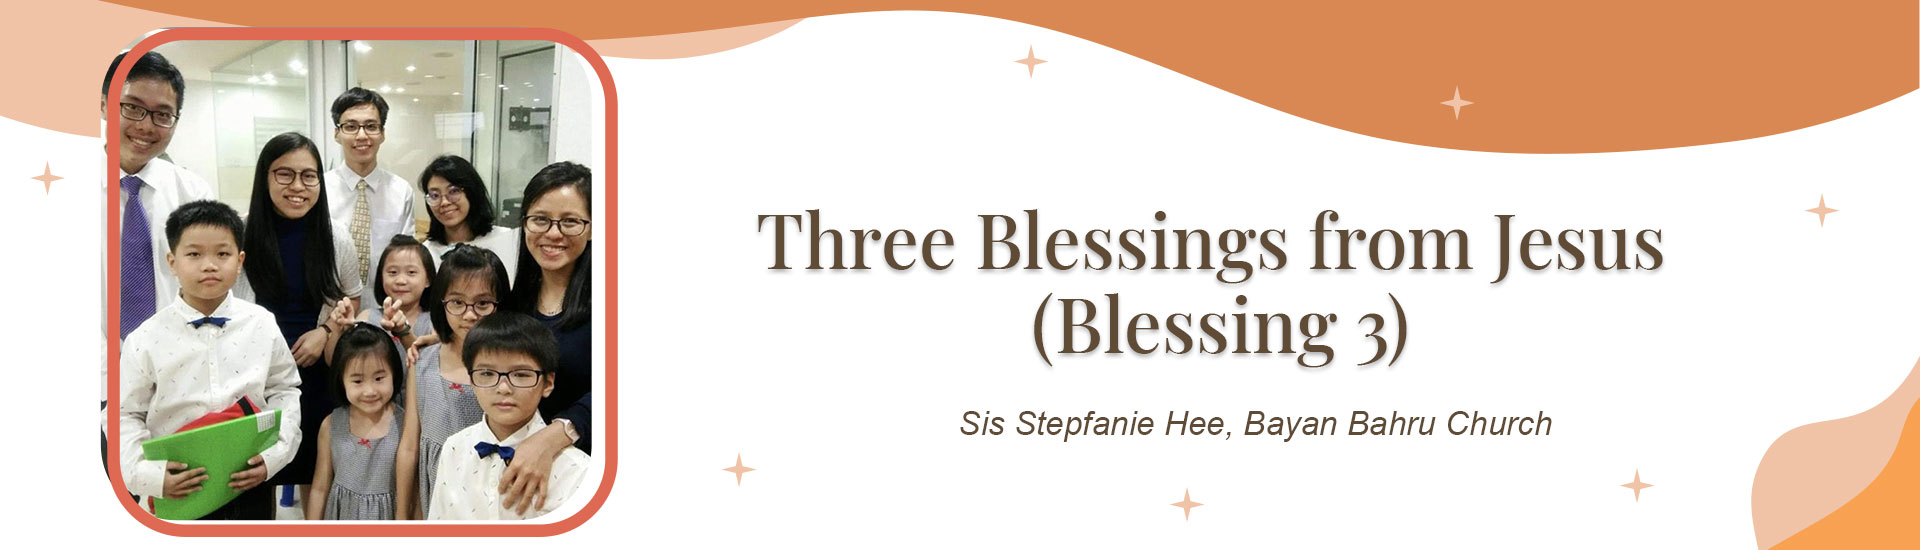 StefanieHee - Three Blessing from Jesus 3